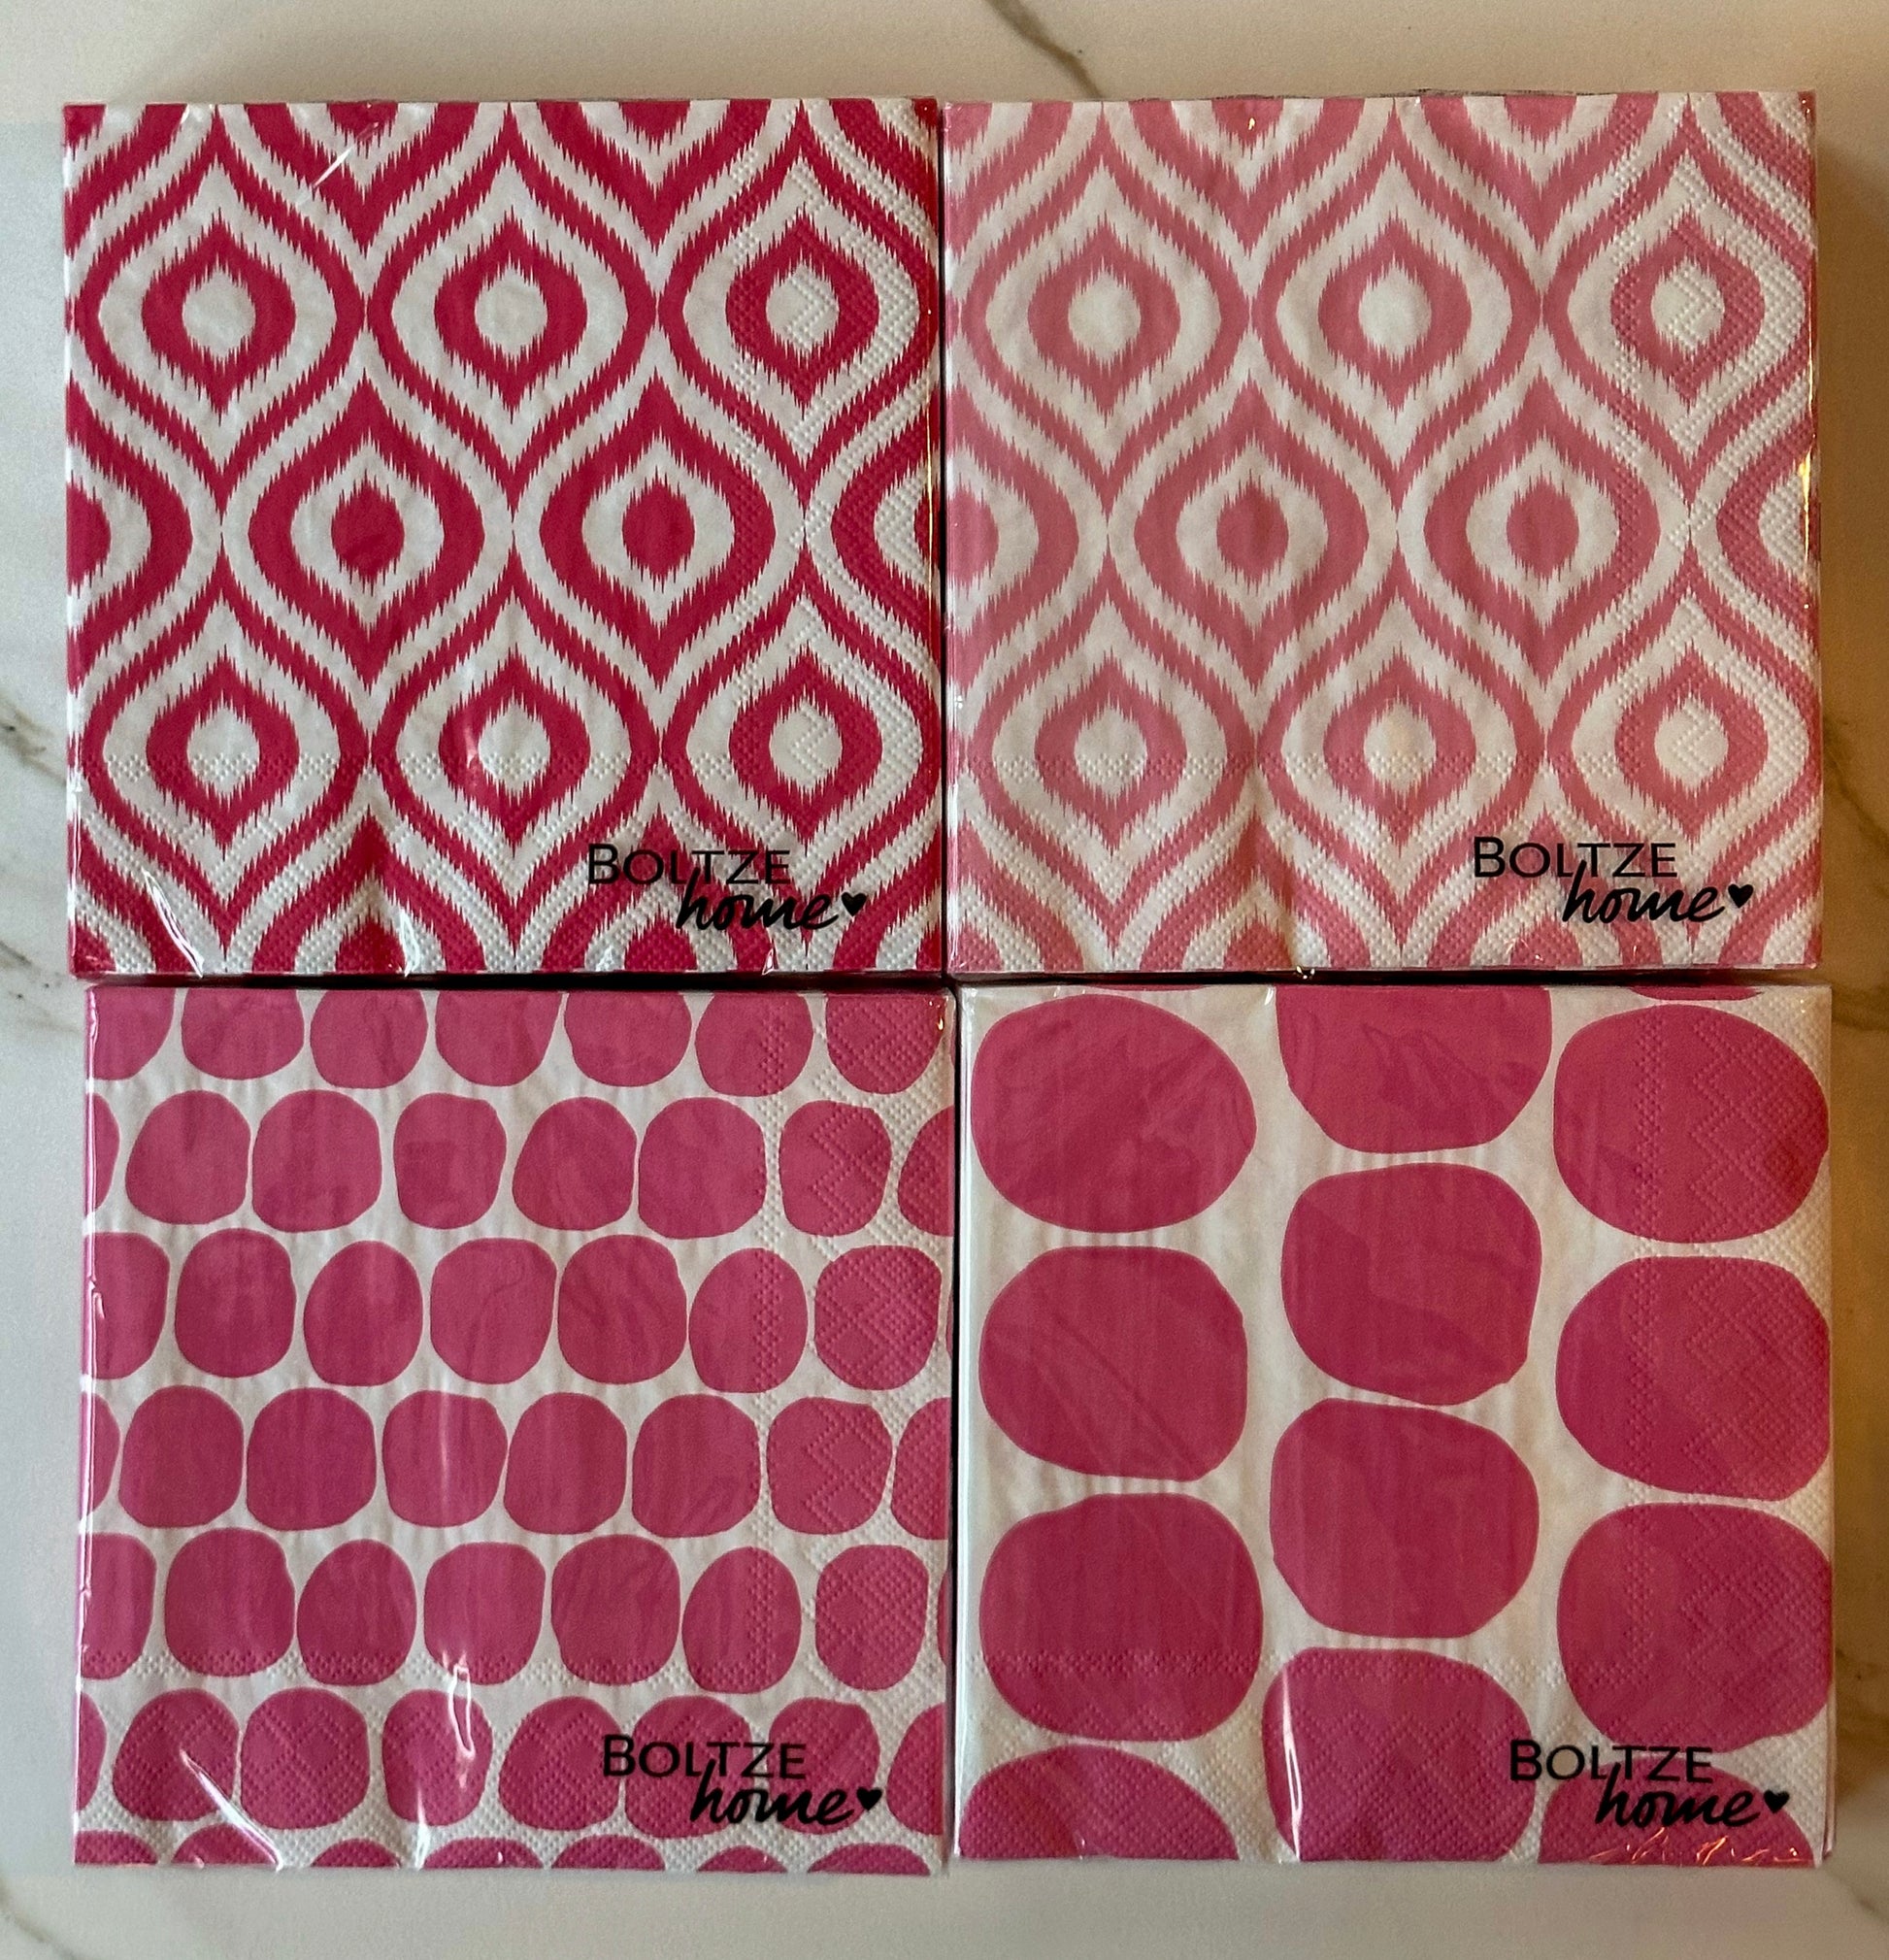 Pink perfection collectie: Hippe papieren servetten in roze bollen print - RUBY Conceptstore 